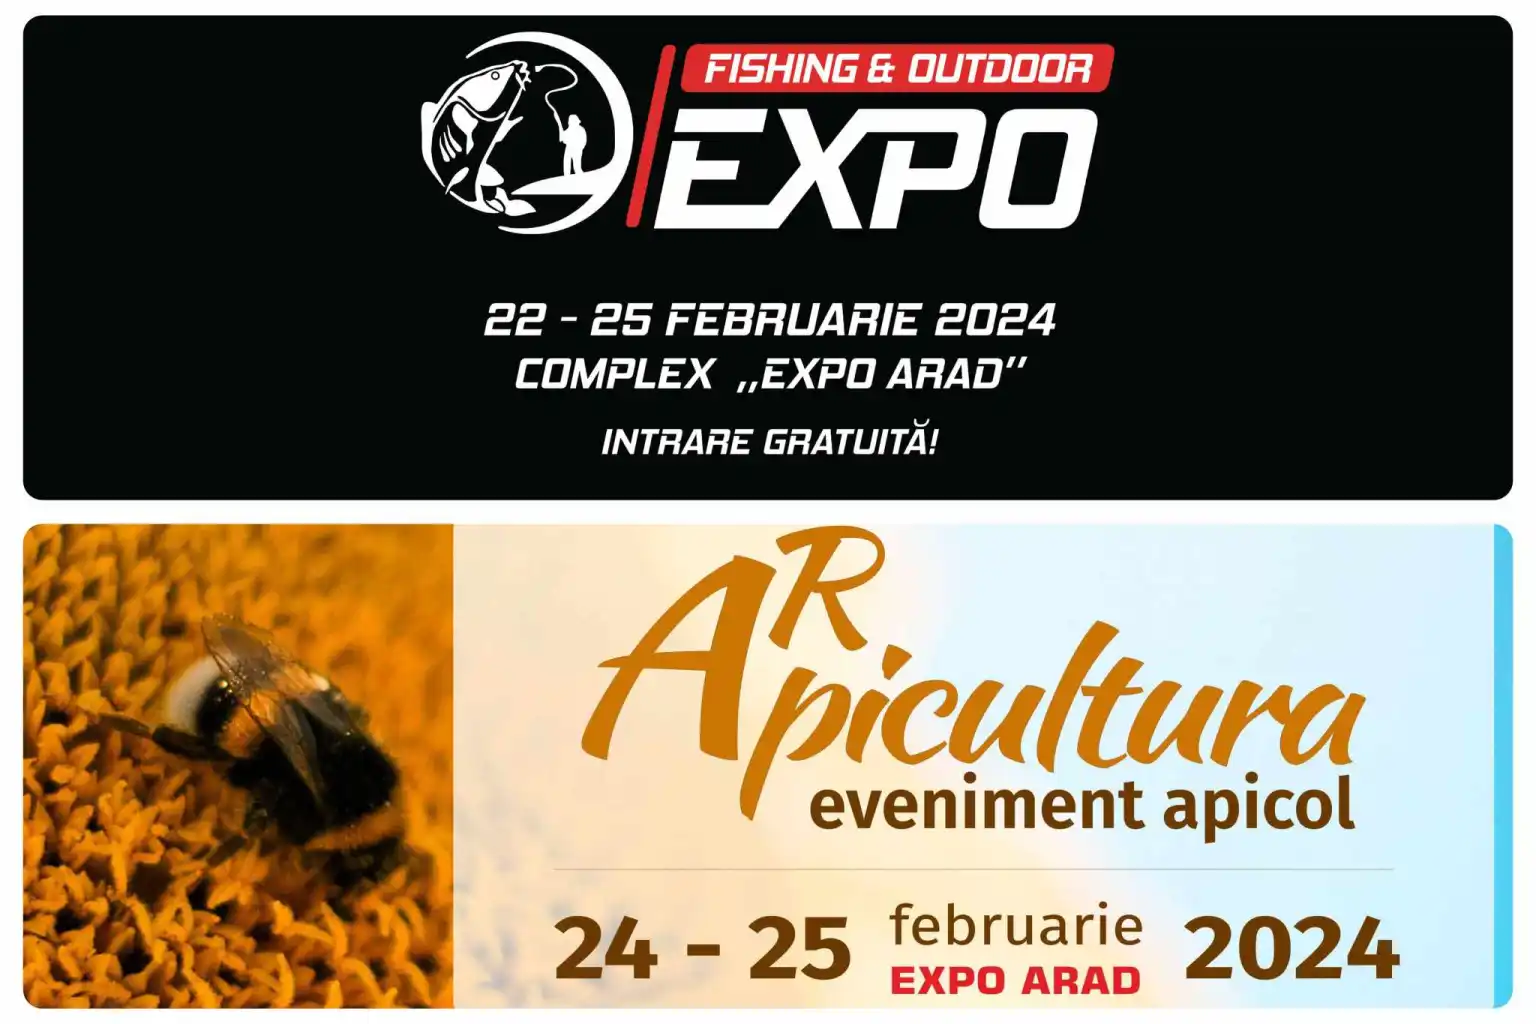  Arpicultura și Fishing&Outdoor la Expo Arad